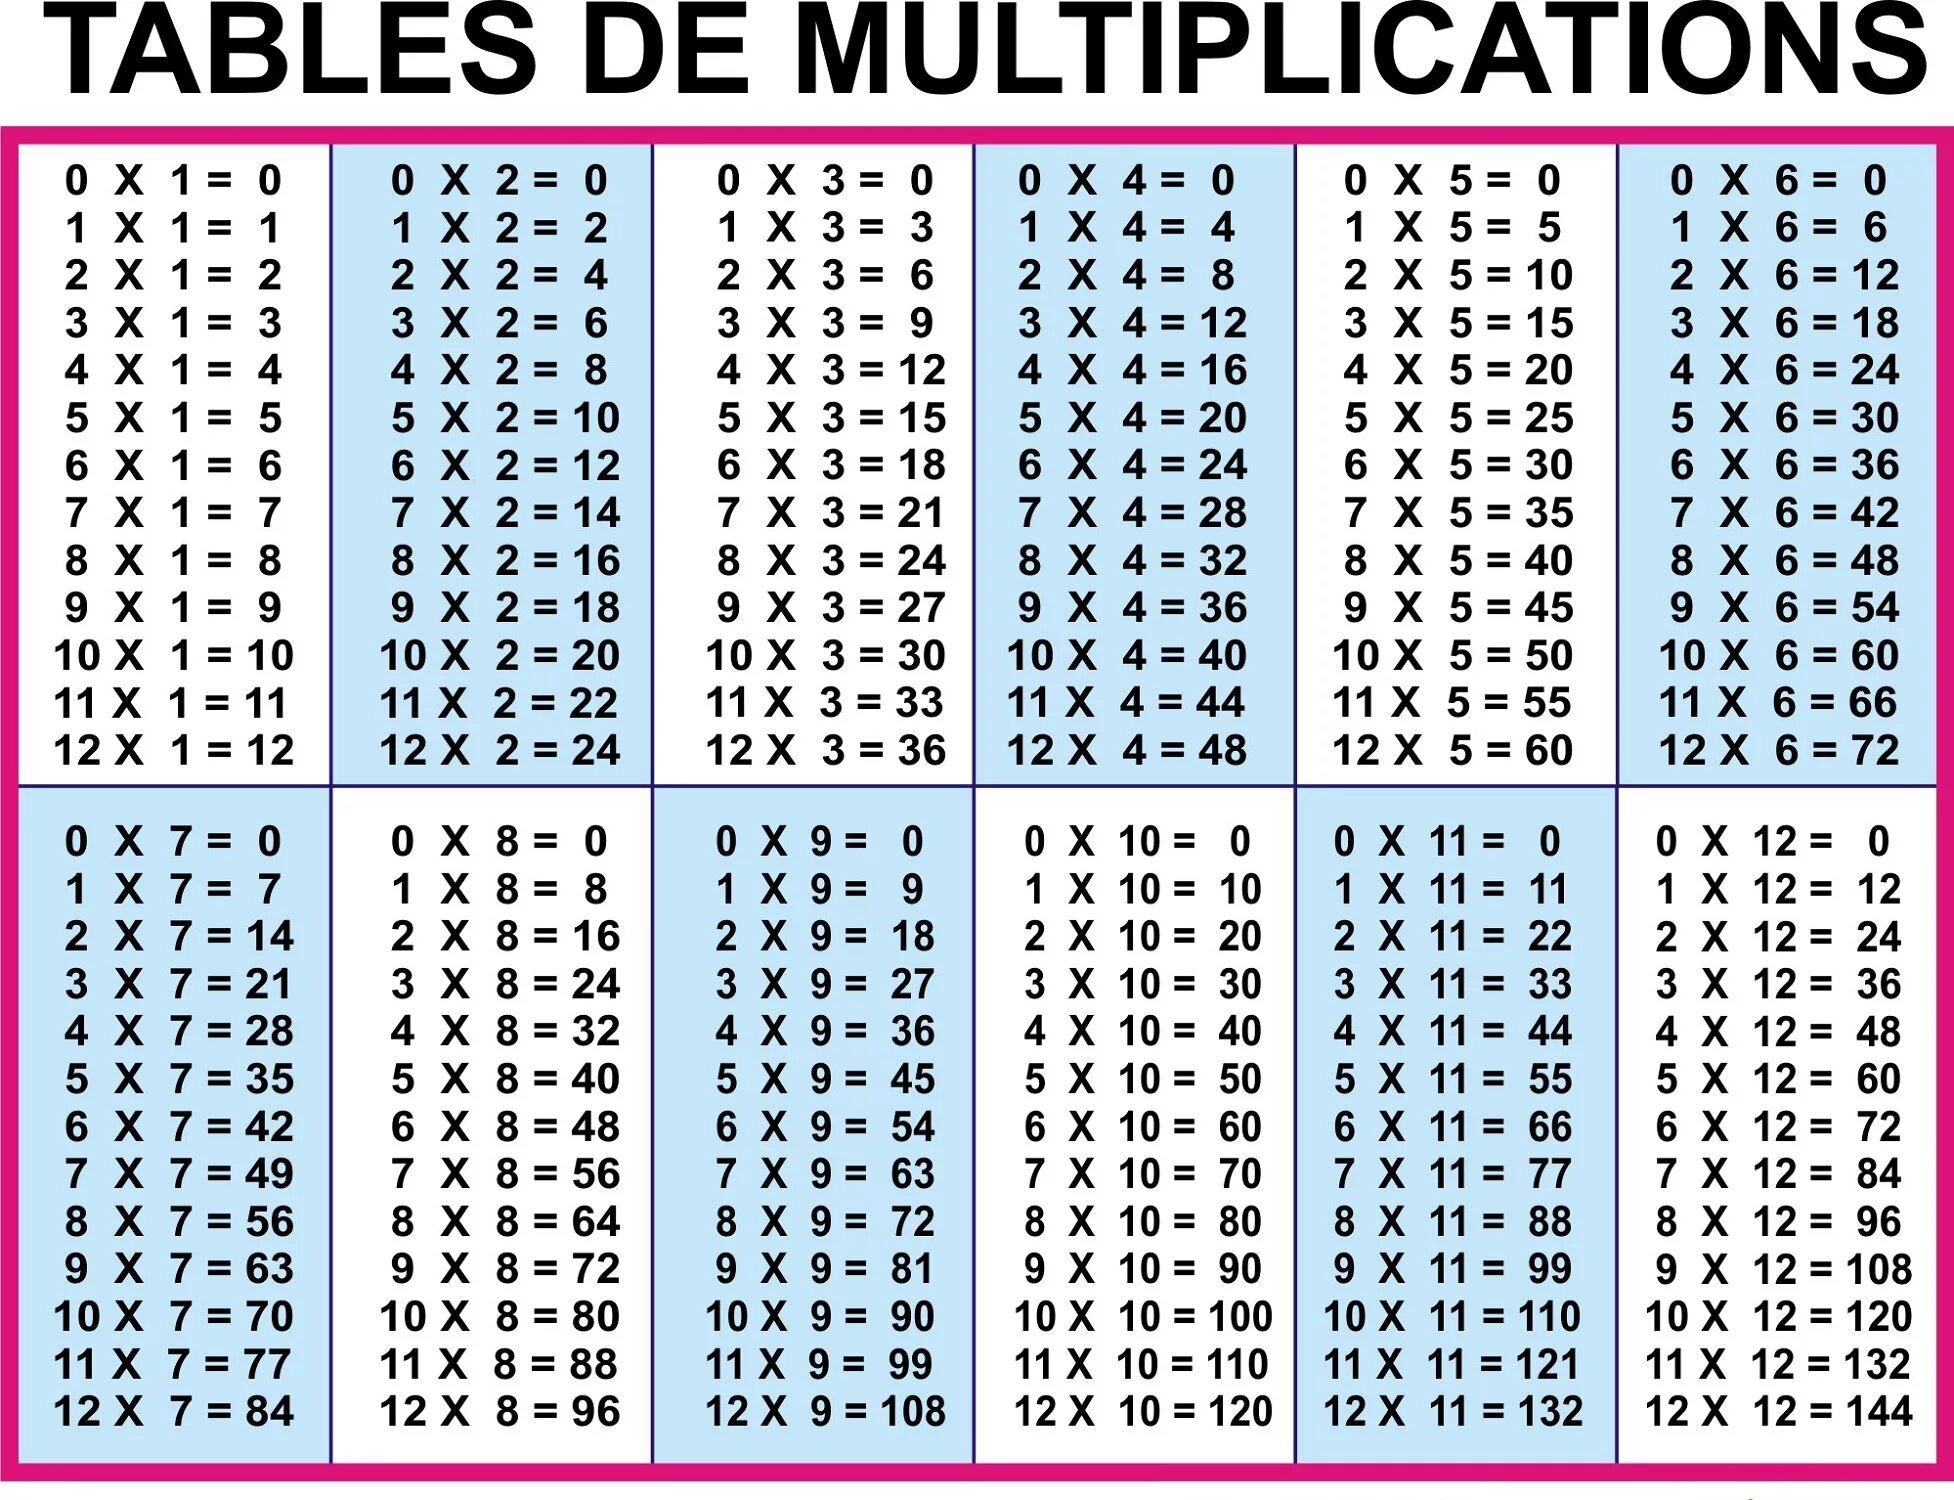 14 умножить на три. Таблица умножения (1-20). Таблица умножения на 2 3 4. Таблица умножения Table. Таблица умножения от 1 до 12.